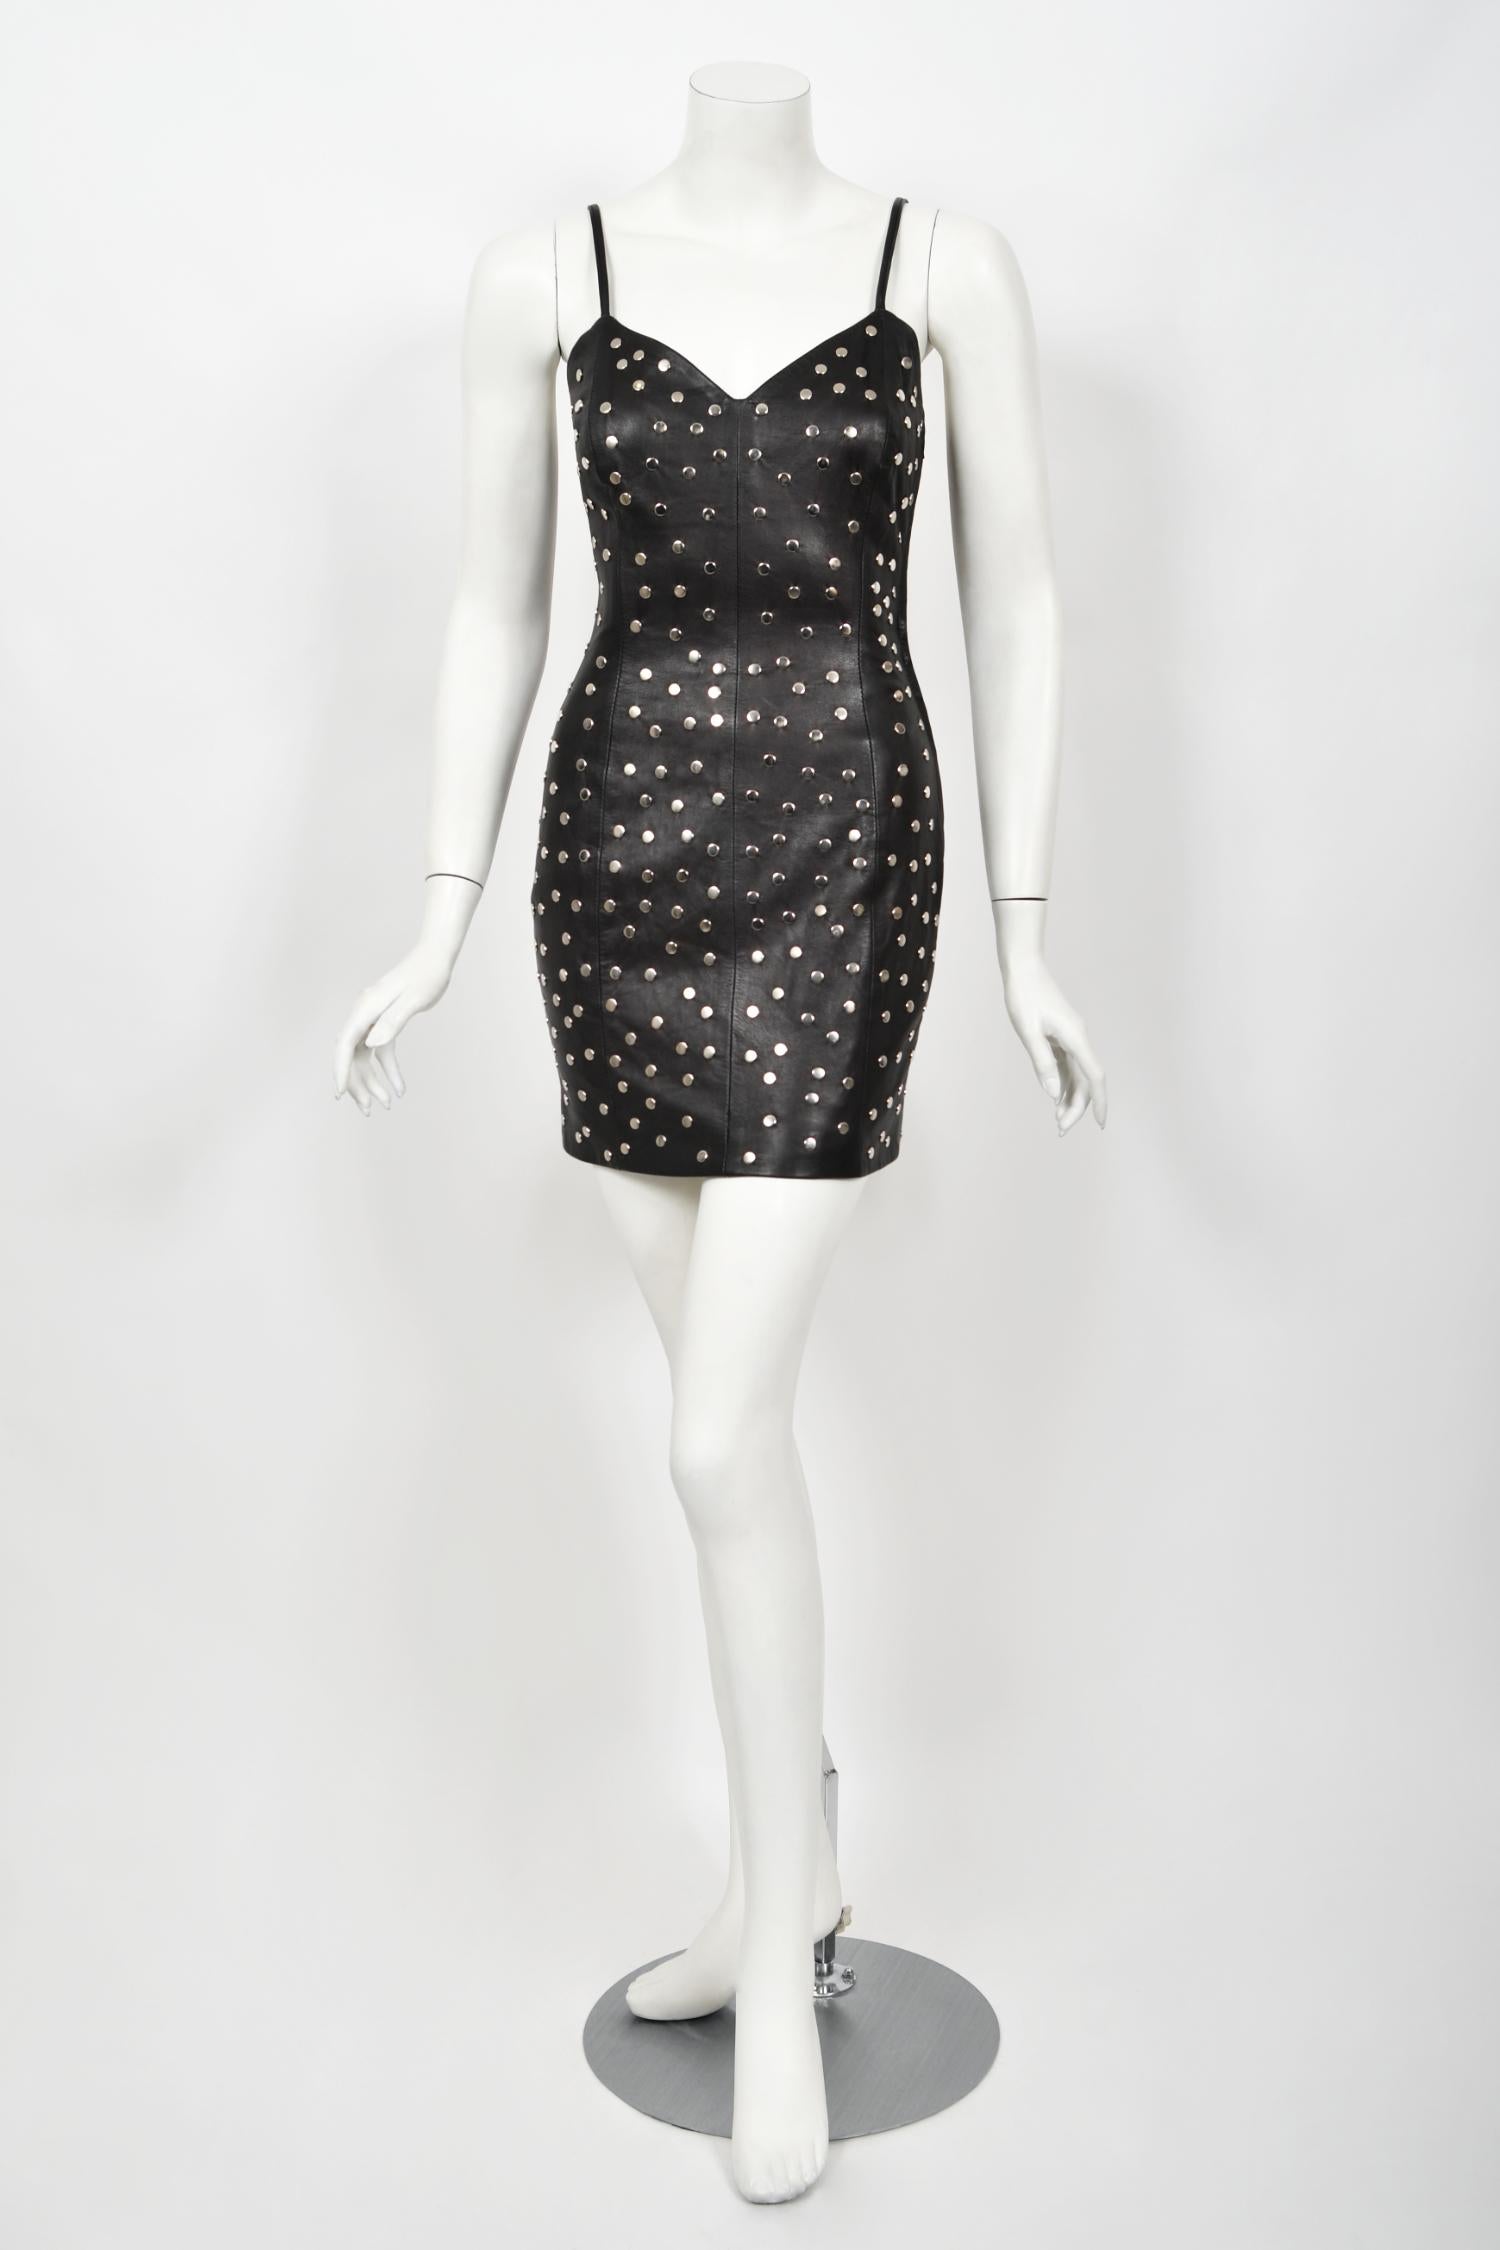 Women's Vintage 1991 Dolce & Gabbana Documented Runway Studded Black Leather Mini Dress